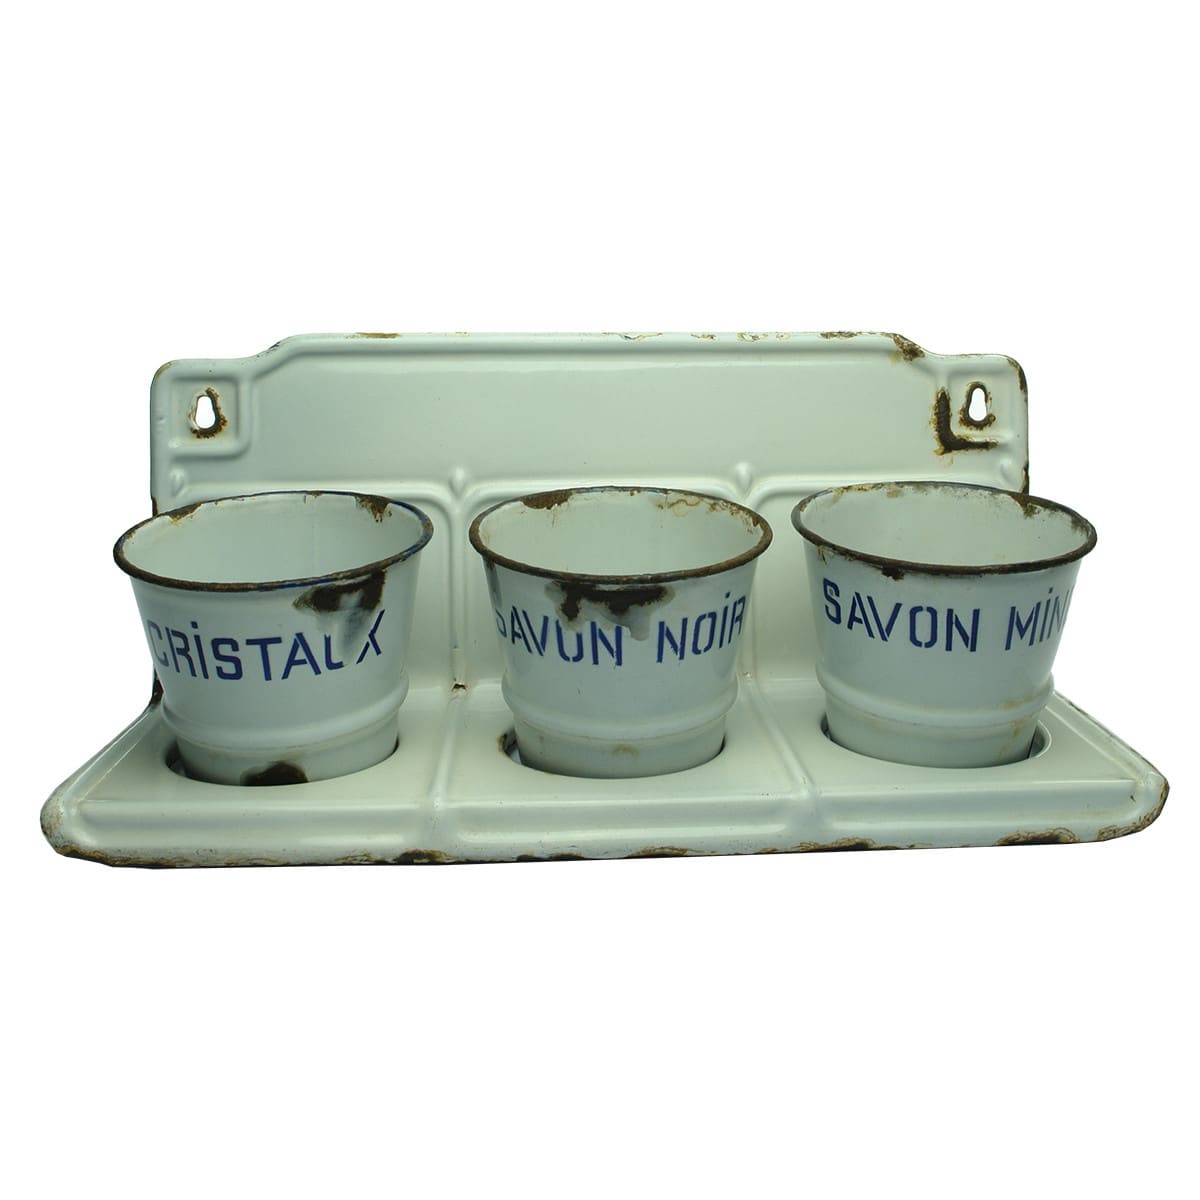 Enamel soap stand with three original enamel containers Savon Mineral; Savon Noir; Cristal X.